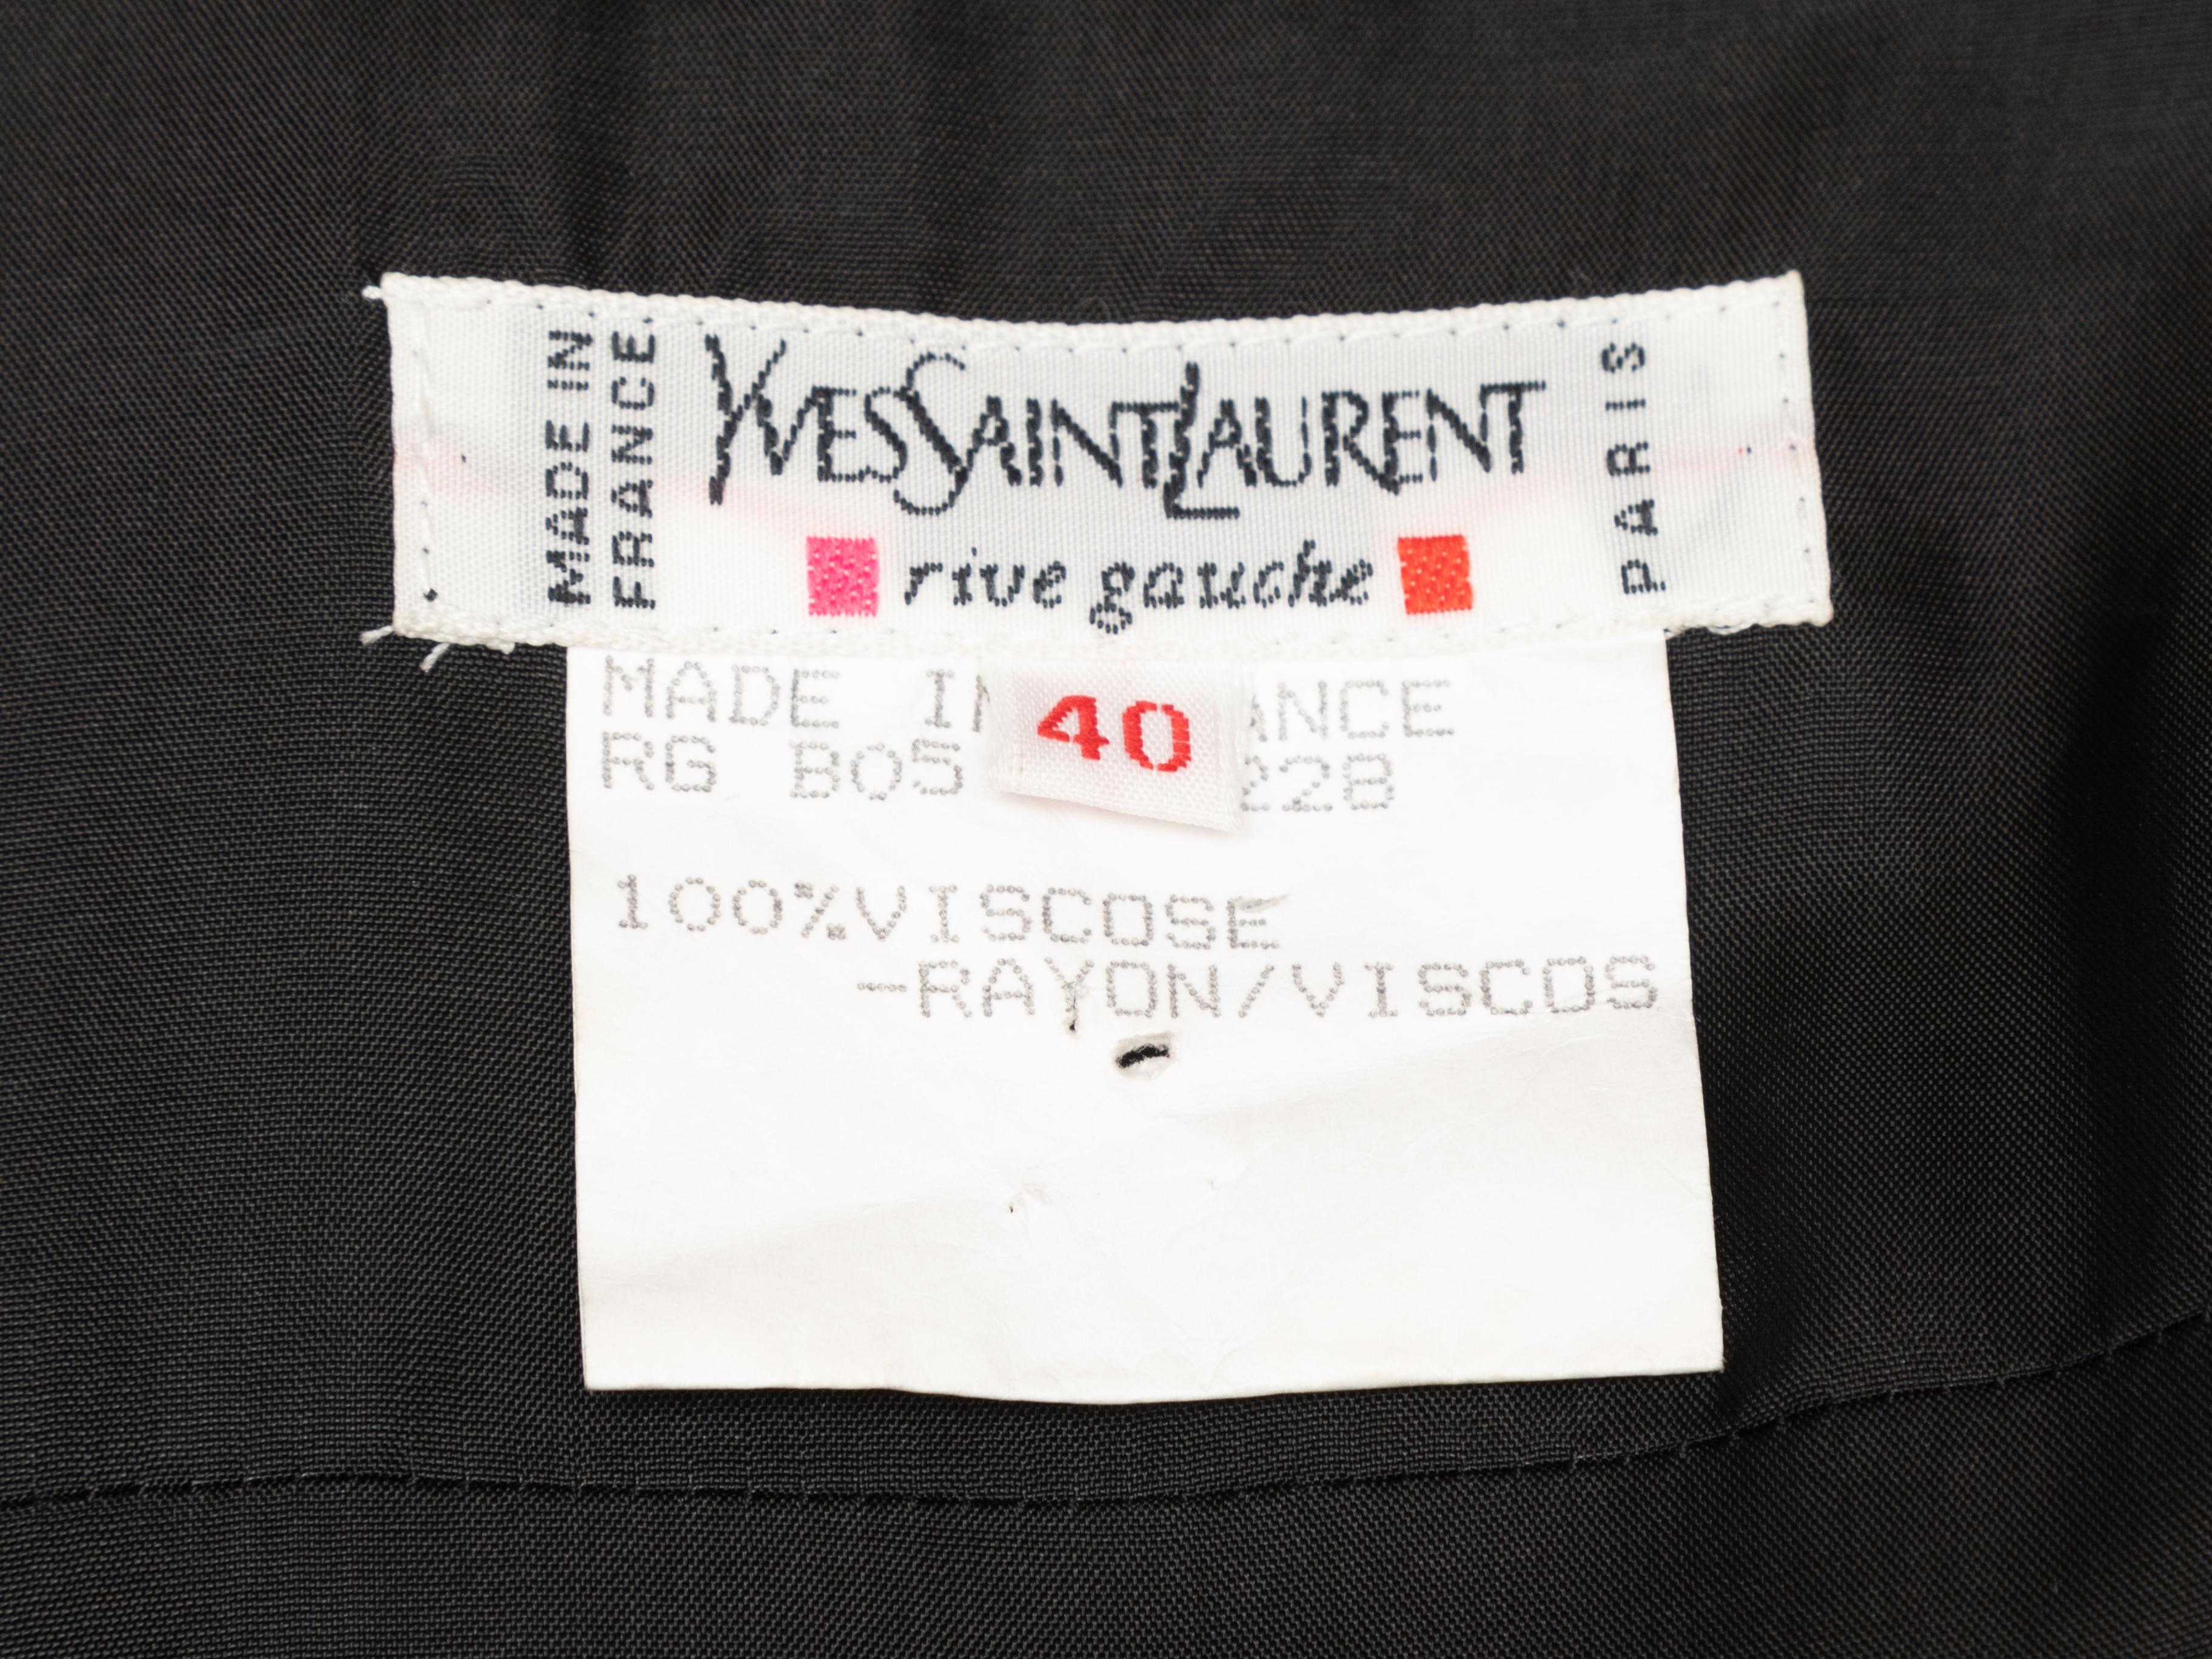 Vintage black and white floral print short sleeve dress by Yves Saint Laurent. V-neck. Pointed collar. Button closures at center front. Designer size 40. 39